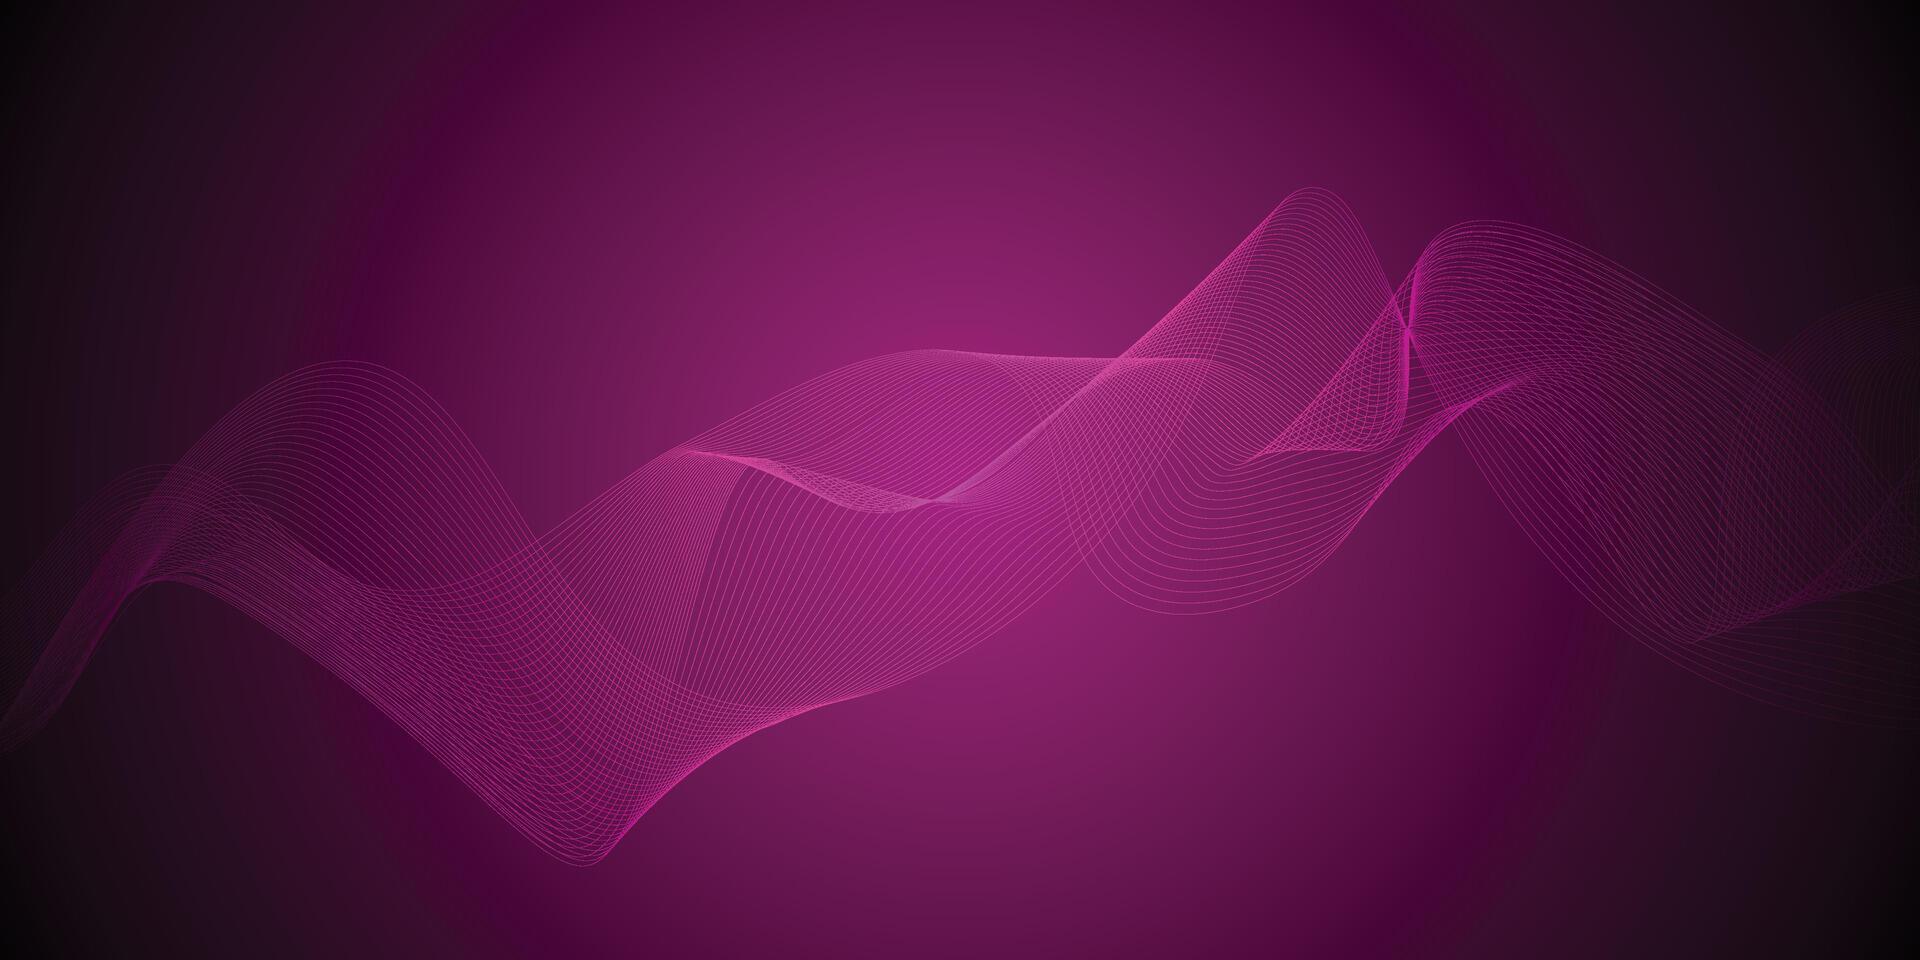 abstract roze Golf lijnen Aan donker roze achtergrond. golvend lijn achtergrond. vloeiende donker kromme met zacht helling achtergrond vector